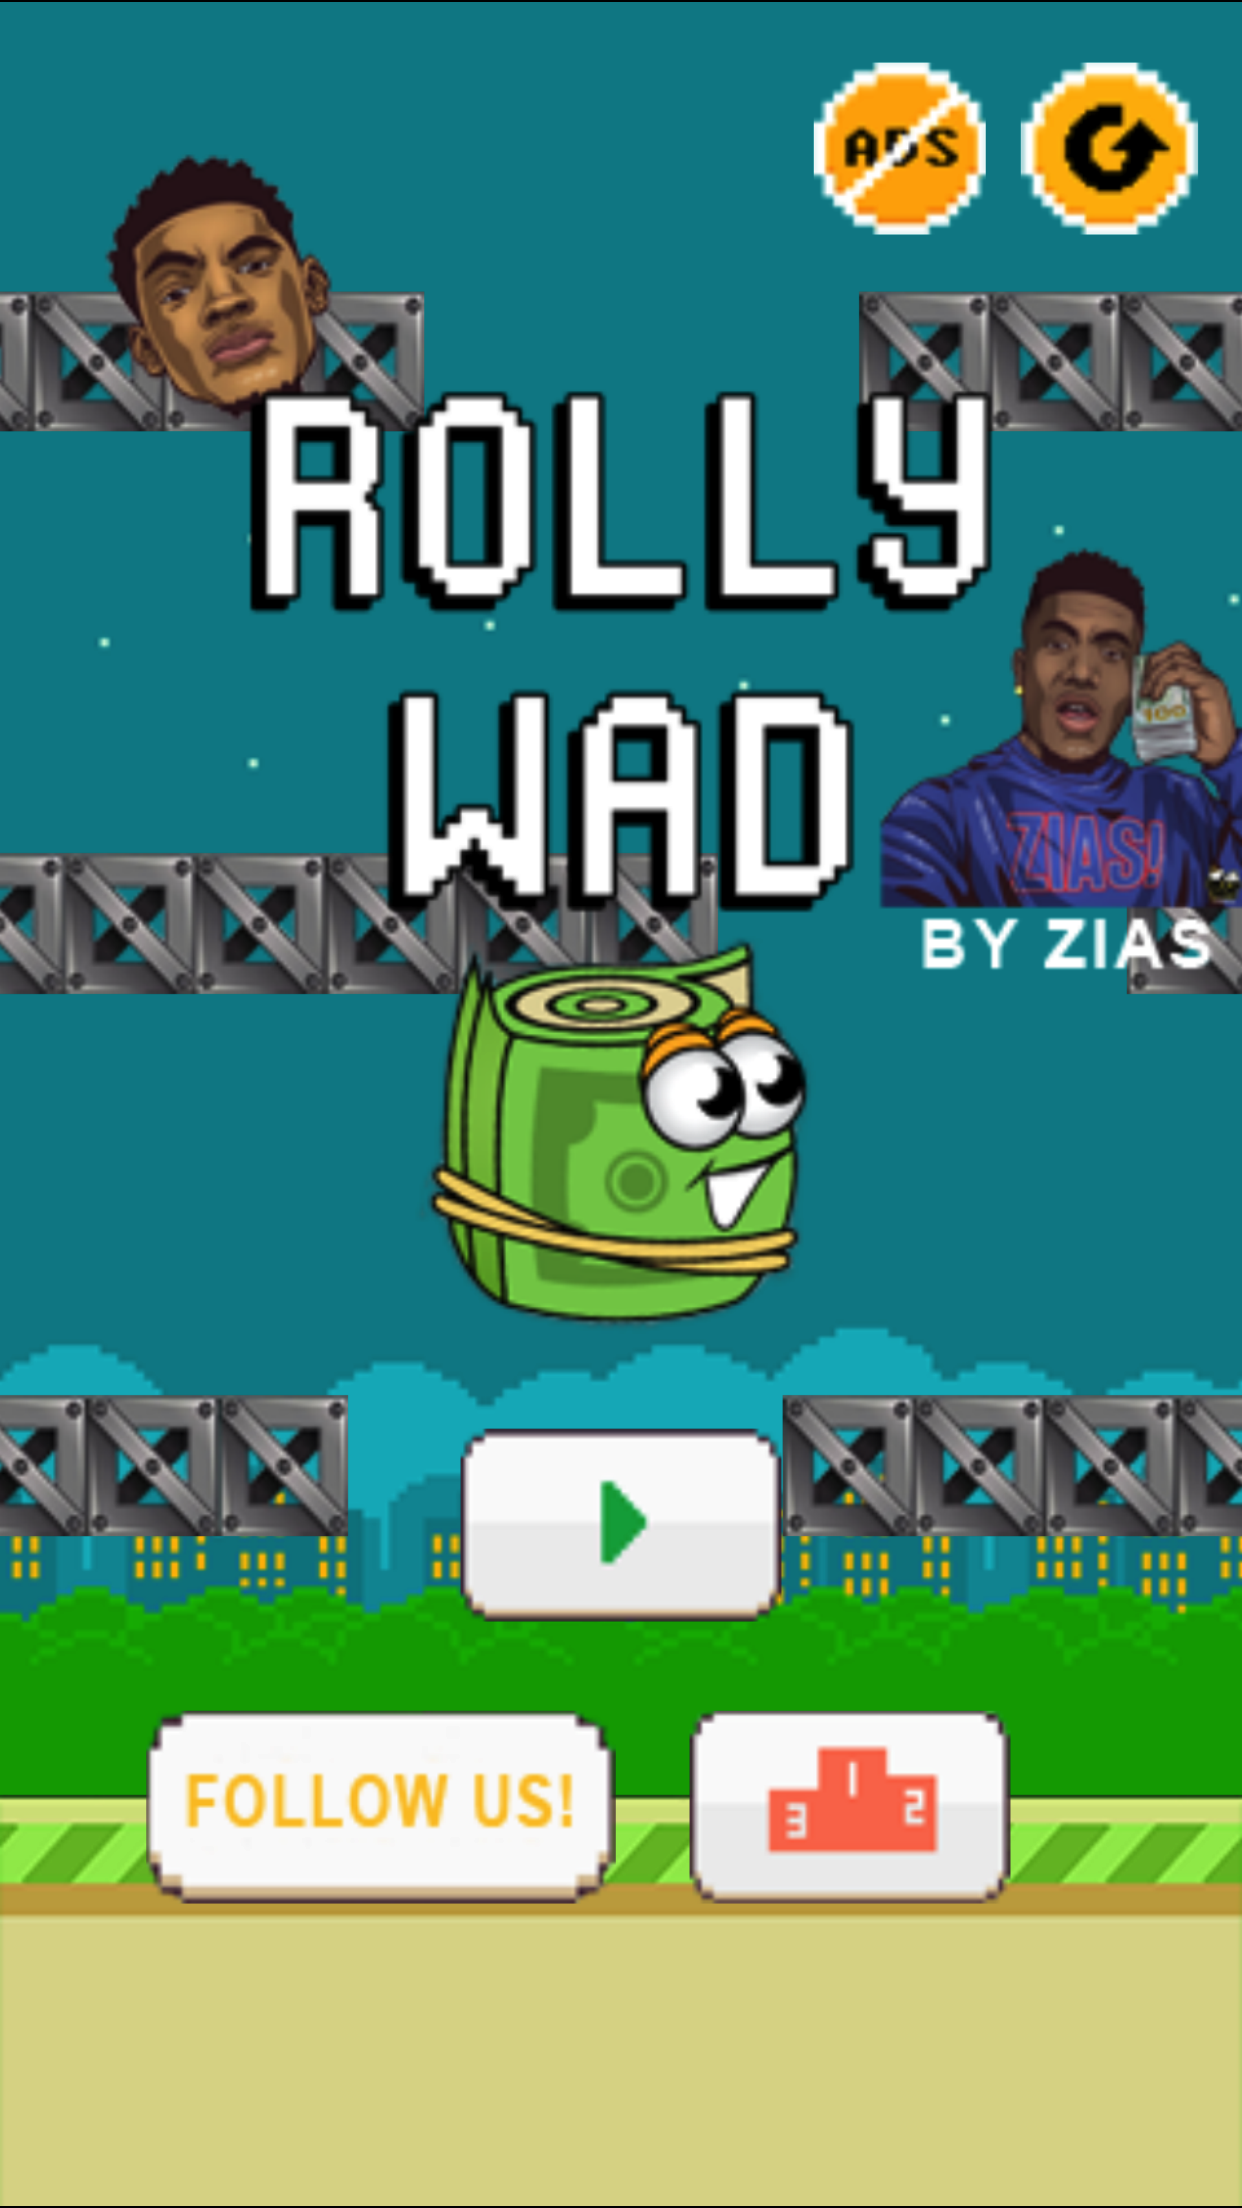 Screenshot 1 of Rolly Wad - Per ZIAS! 3.0